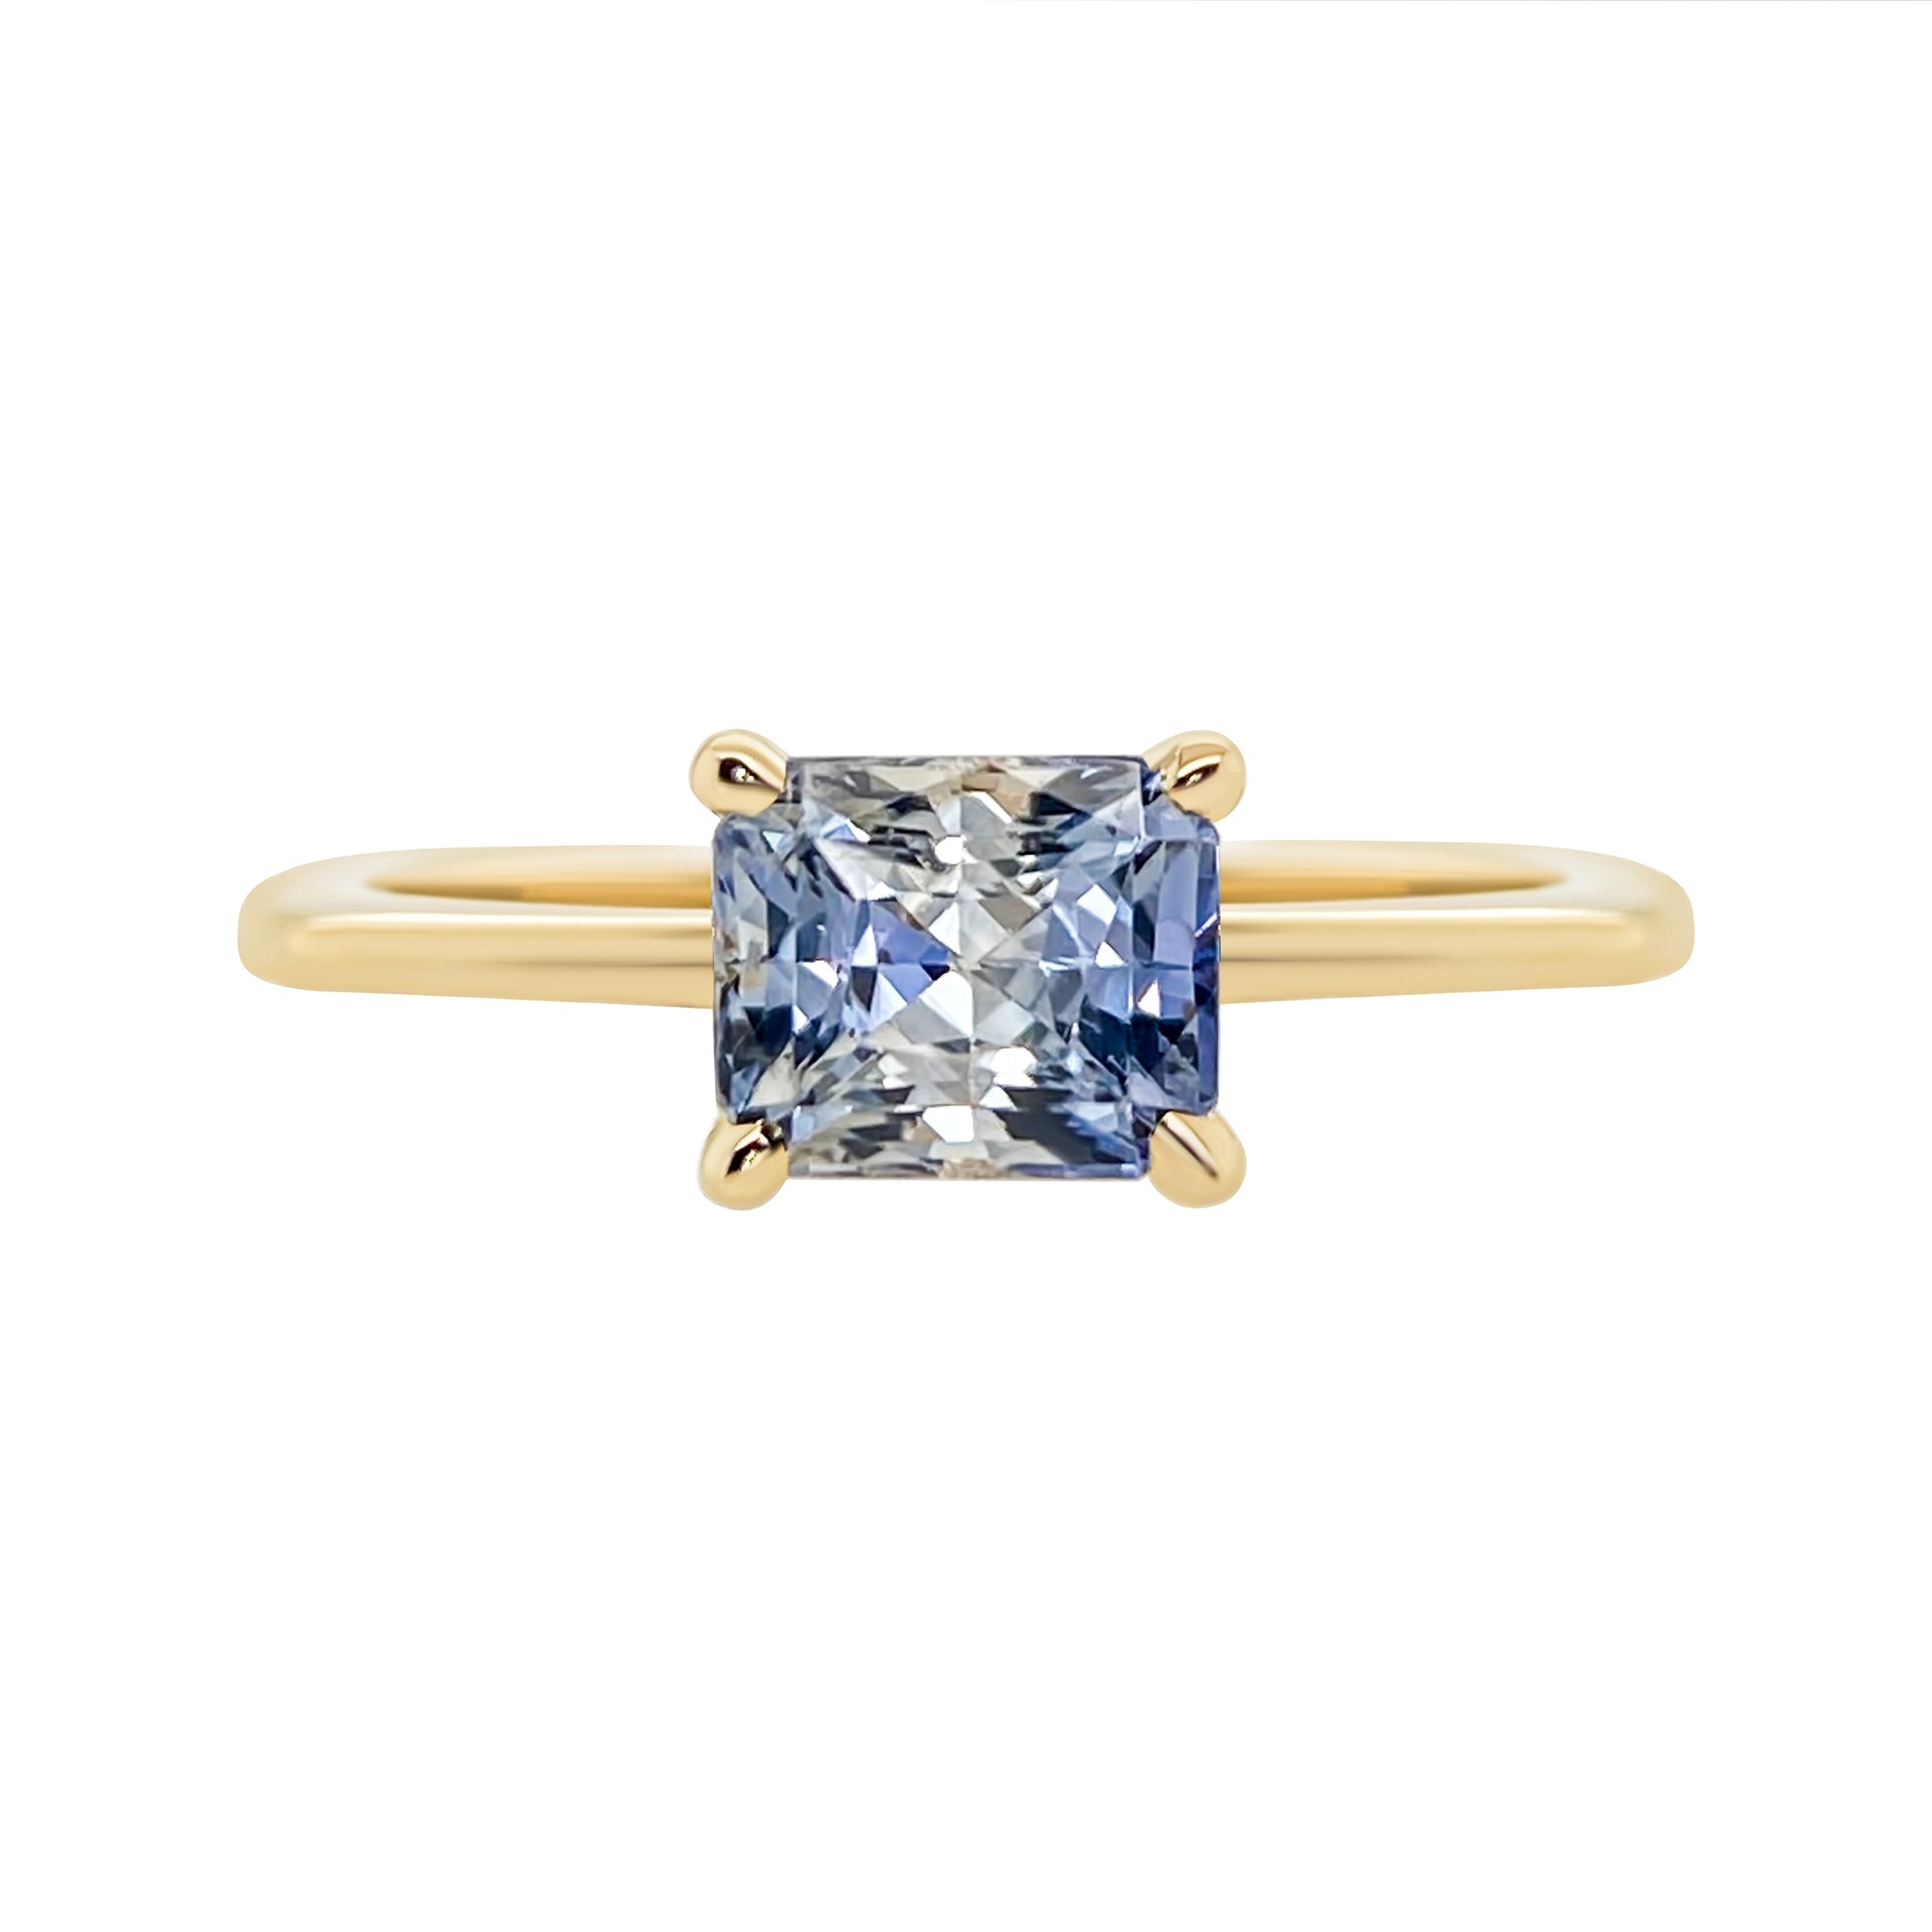 Blue Parti Color Radiant Cut Sapphire Engagement Ring East West Solitaire 14K yellow gold